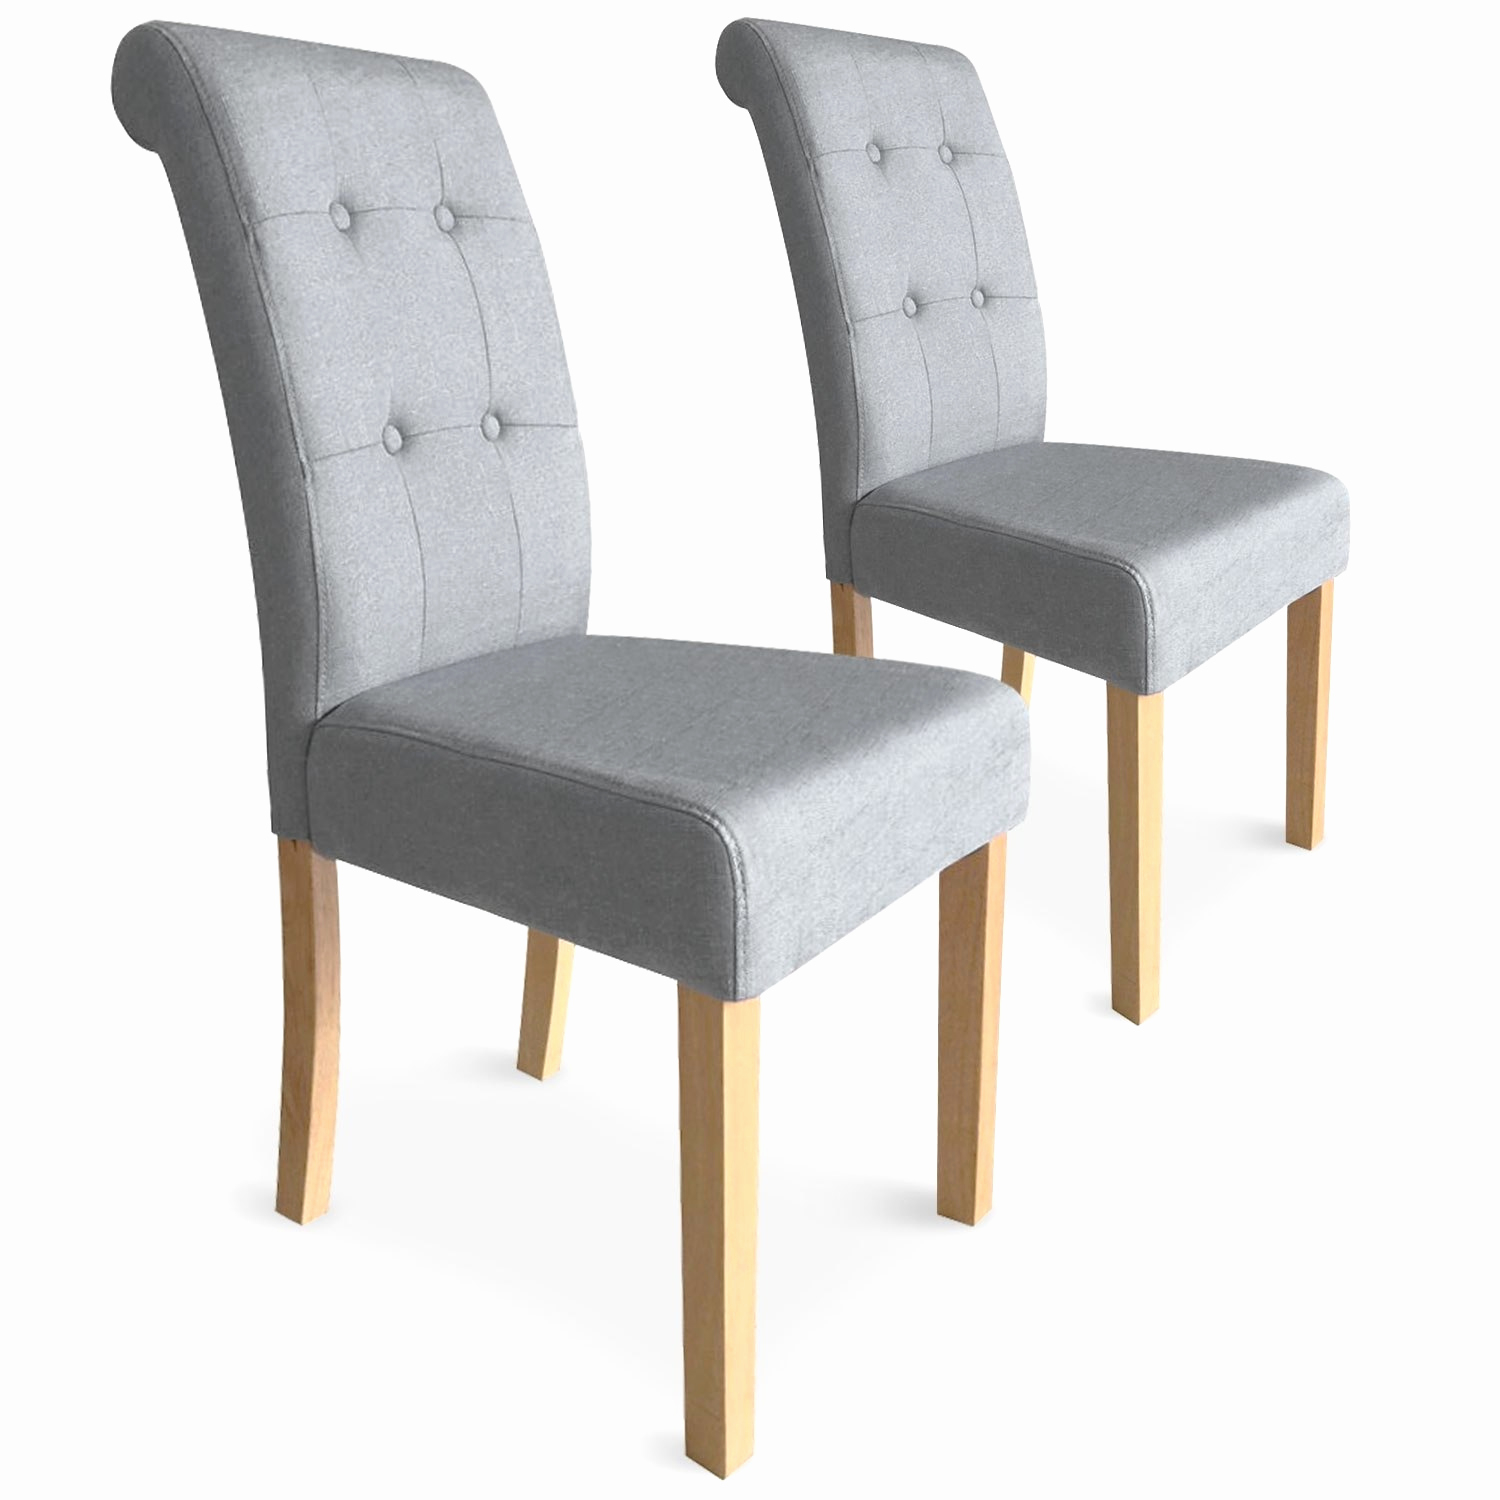 fauteuil osier conforama beau salon salle a manger a fauteuil osier conforama inspirant chaises de cuisine 32 genial table et of